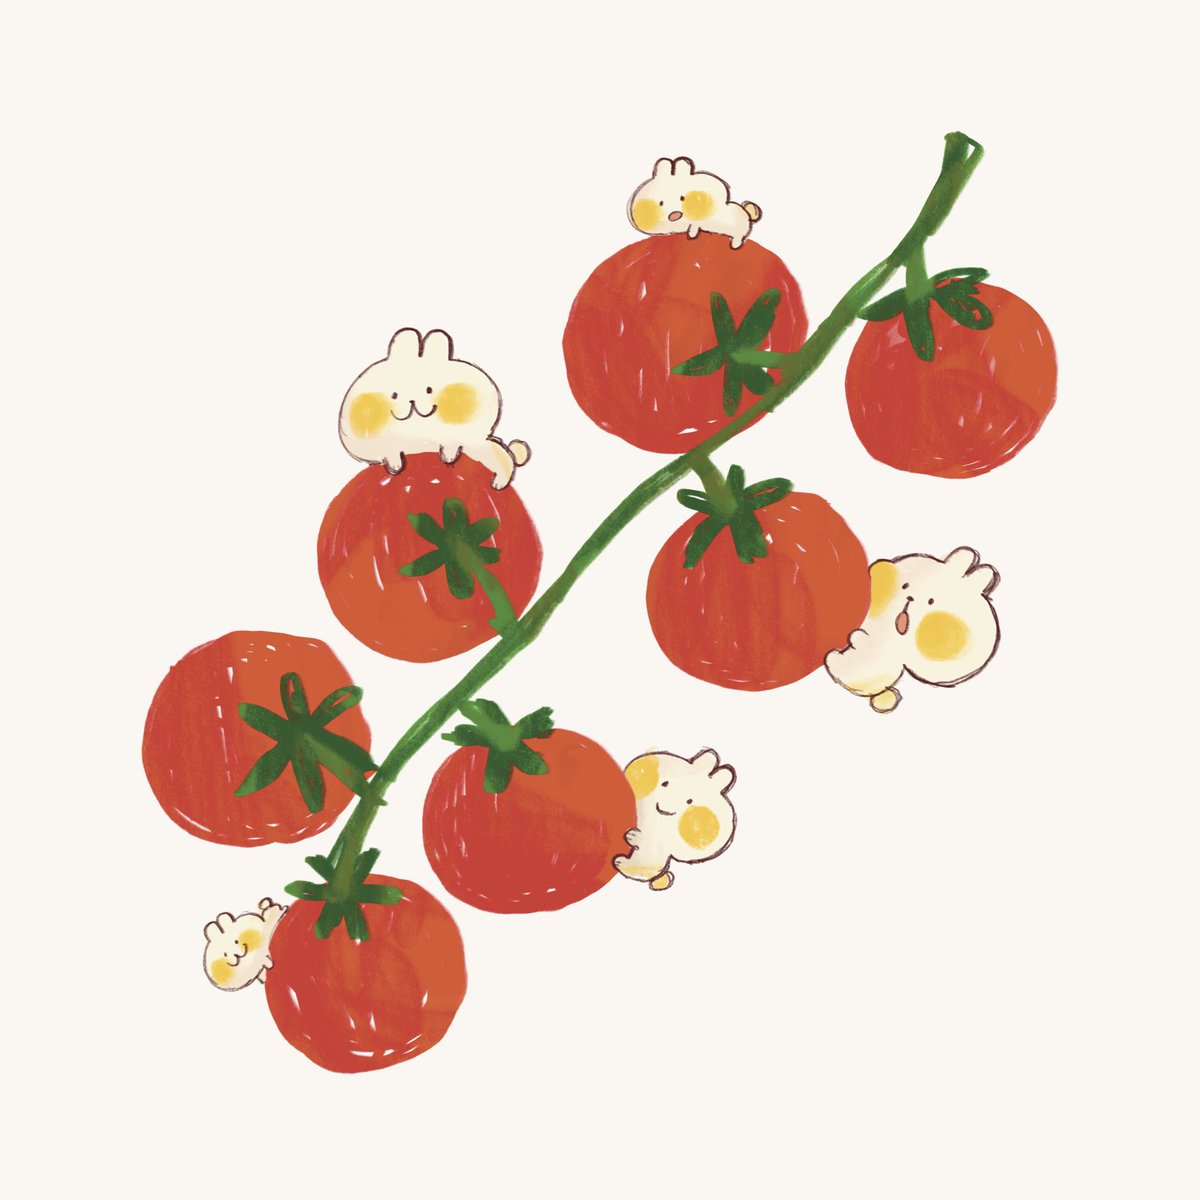 dreaming of tomato season 🍅